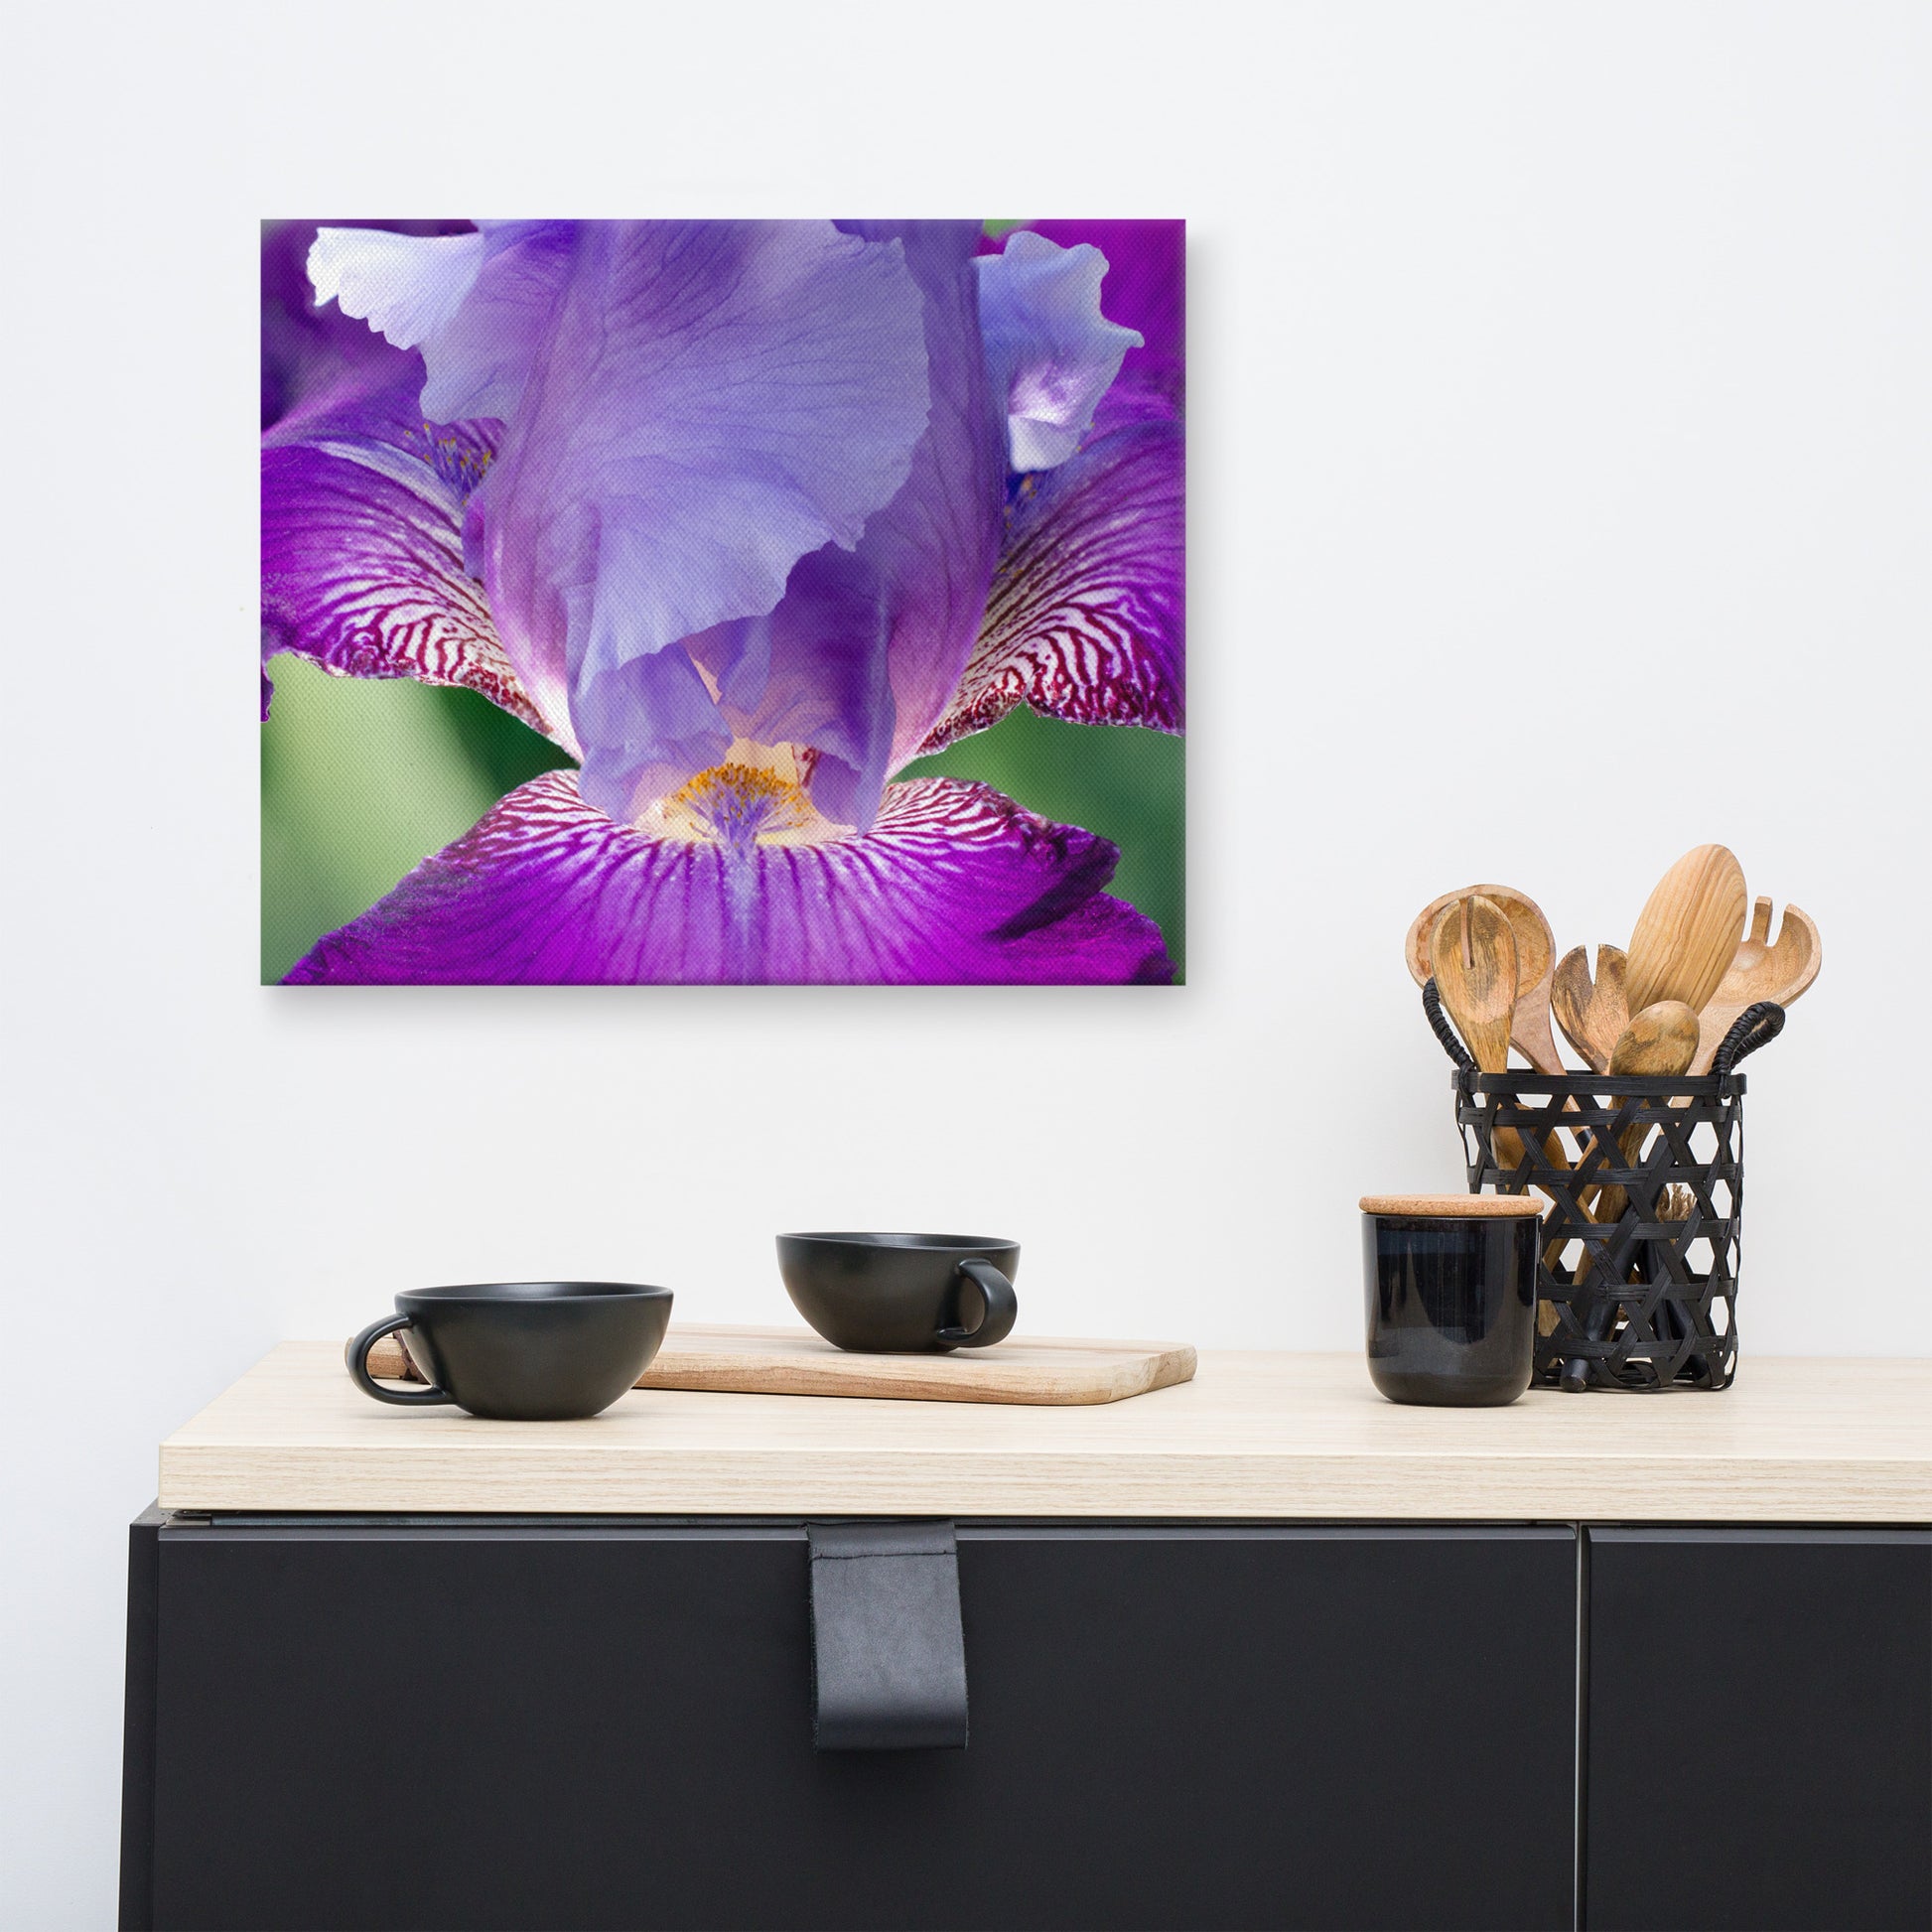 Purple Prints For Bedroom: Glowing Iris - Botanical / Floral / Flora / Flowers / Nature Photograph Canvas Wall Art Print - Artwork